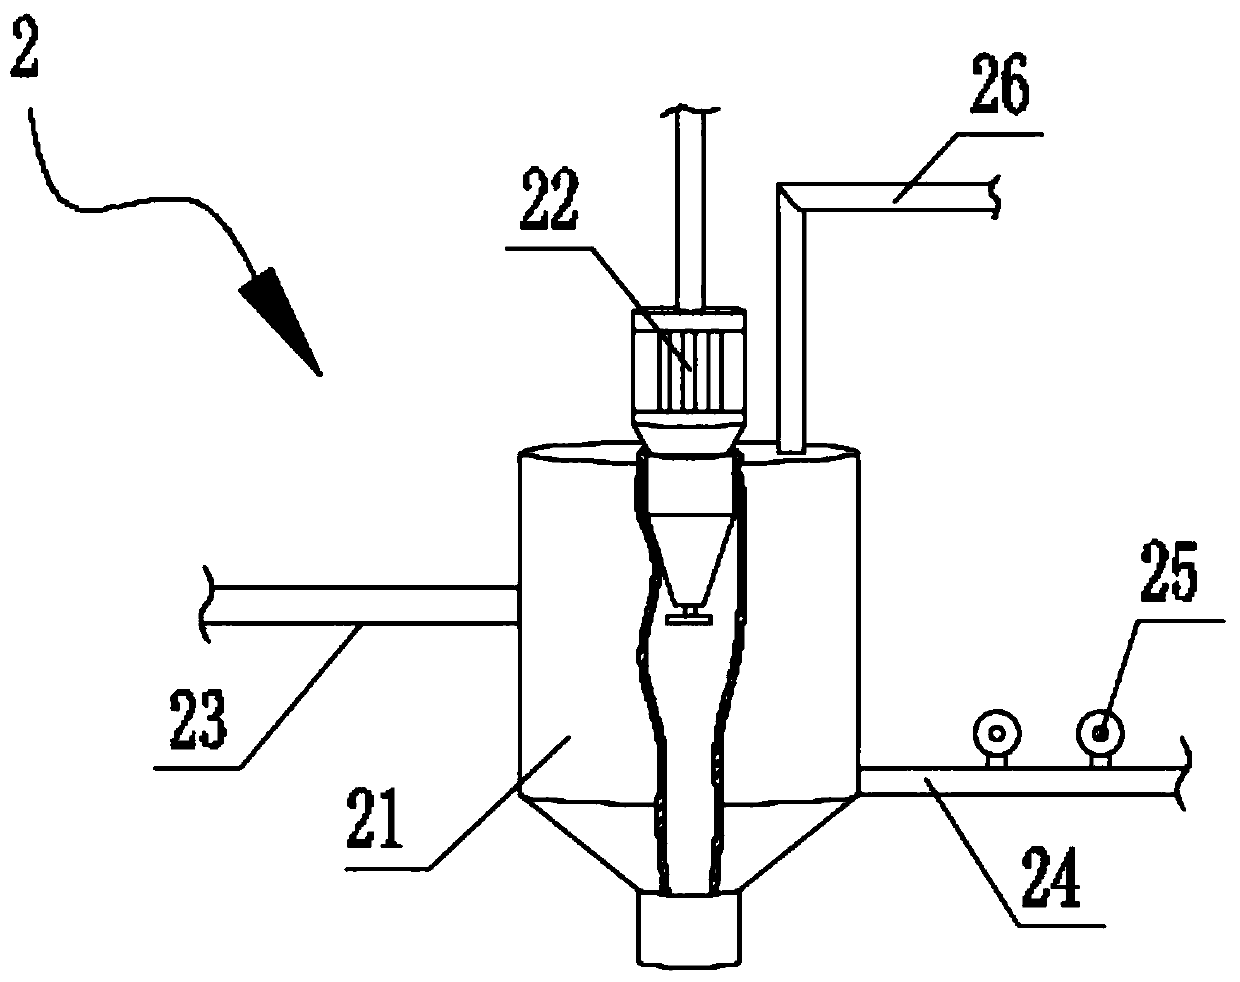 Semi-dry method efficient desulfurization system